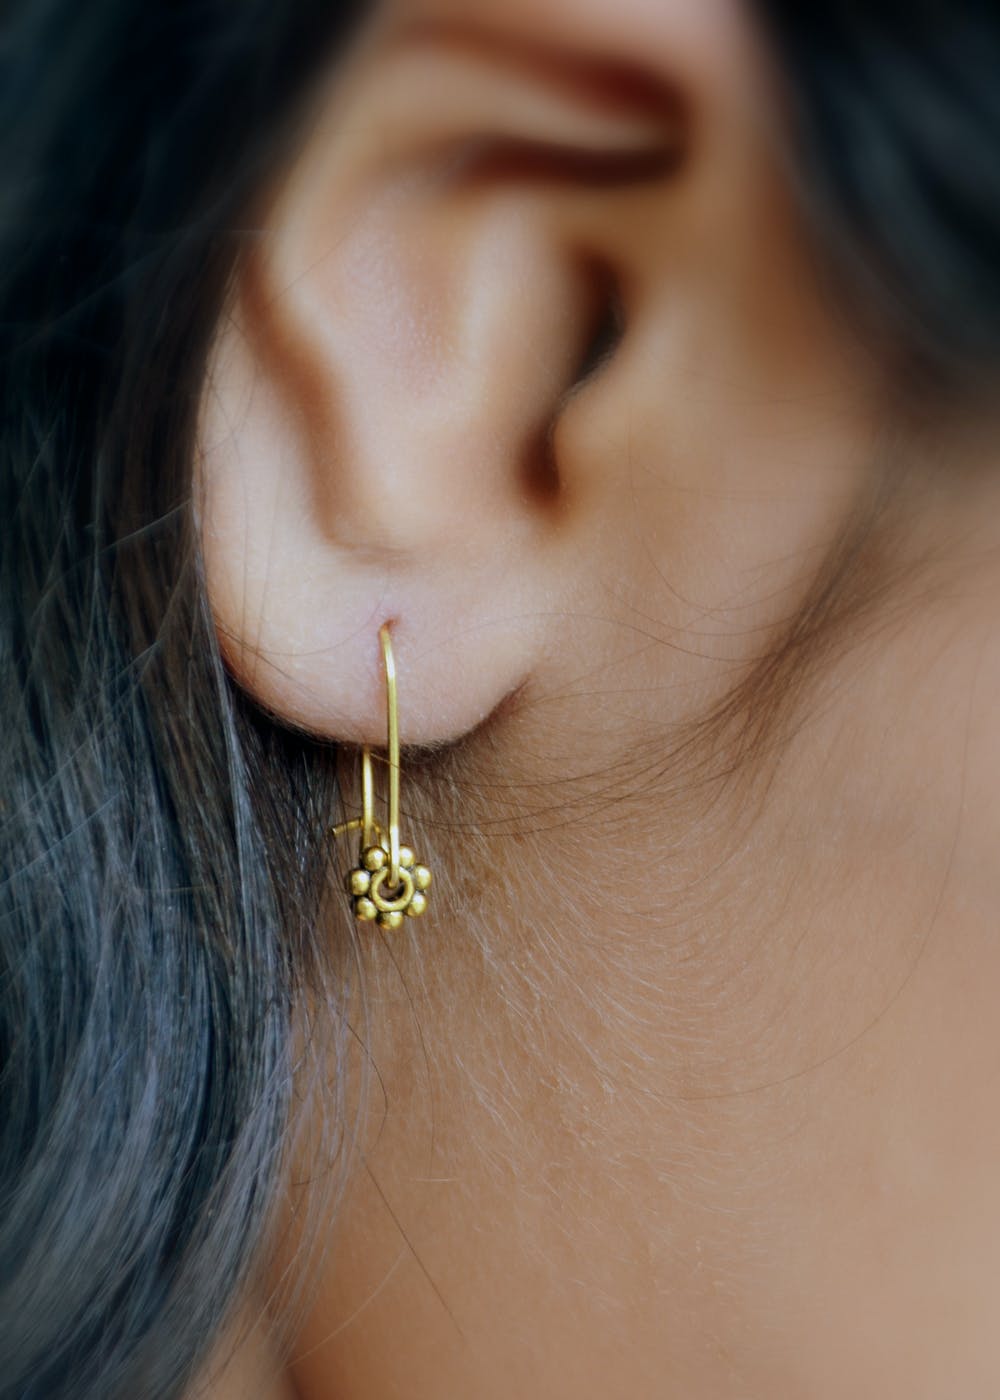 12 Pairs Gold Small Hoop Earrings Pack with Charm Silver Mini Hoop Danglers  Sets | eBay